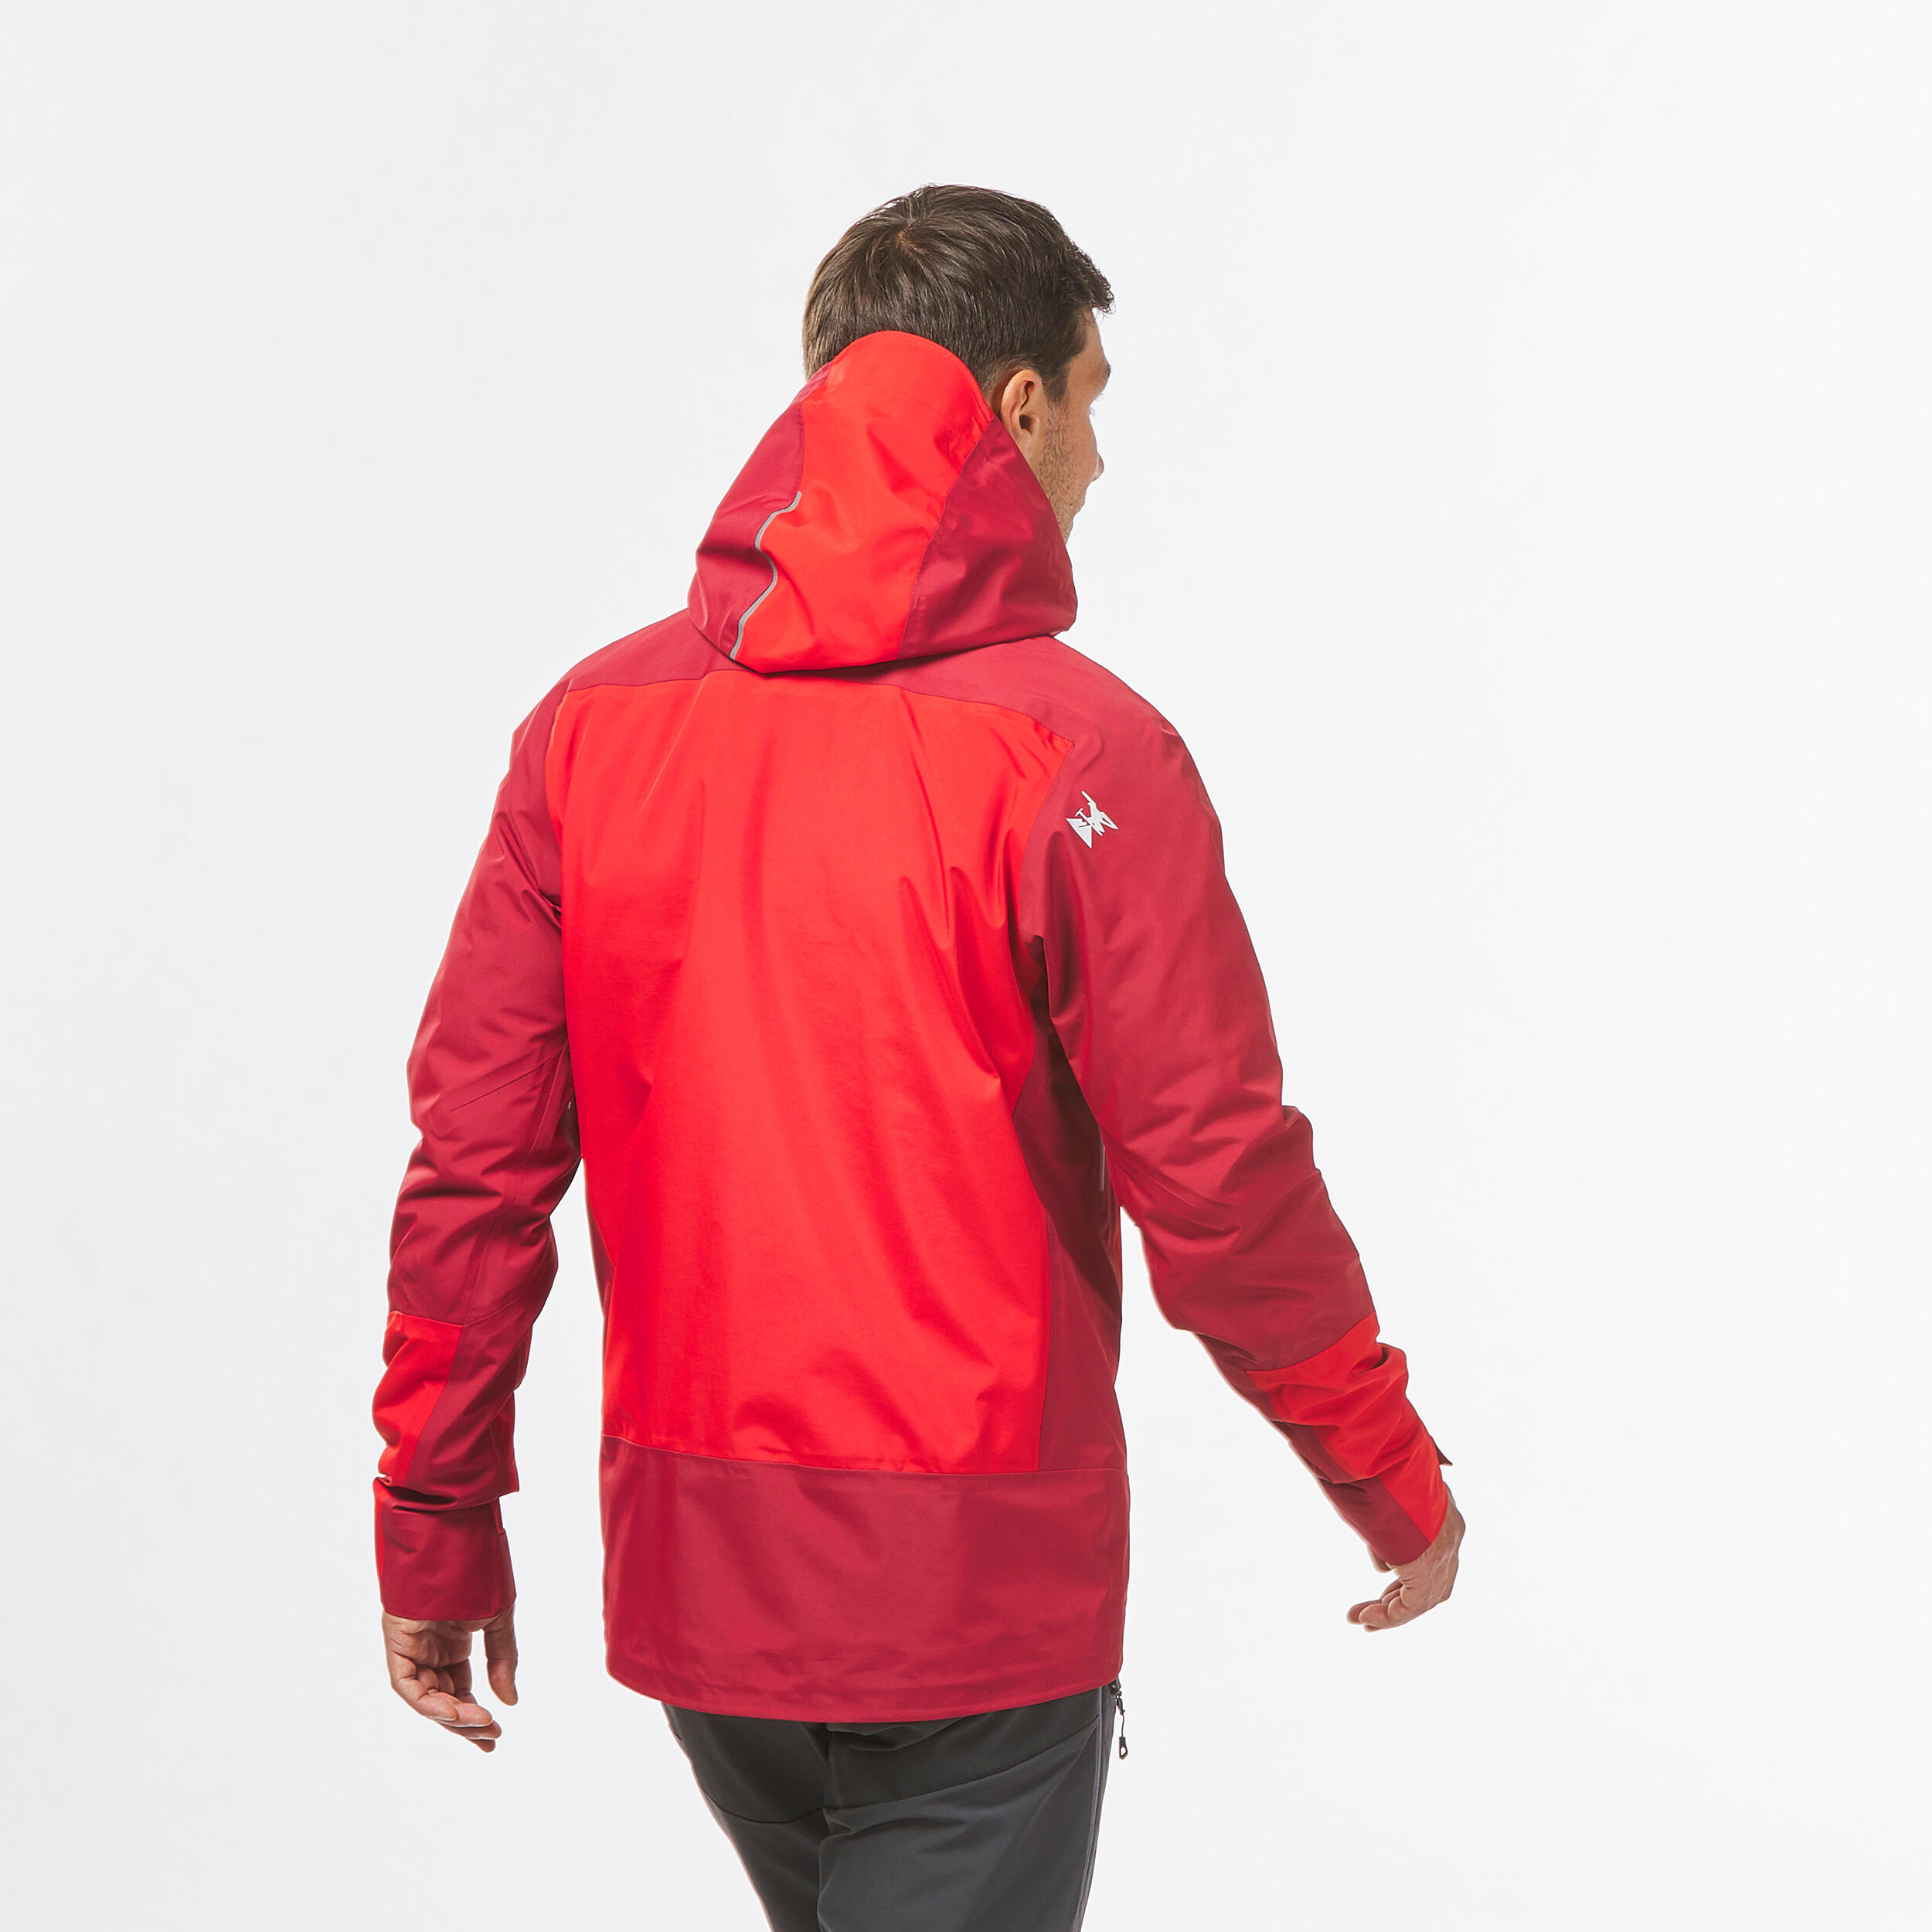 Men’s waterproof durable mountaineering jacket, red 4/17